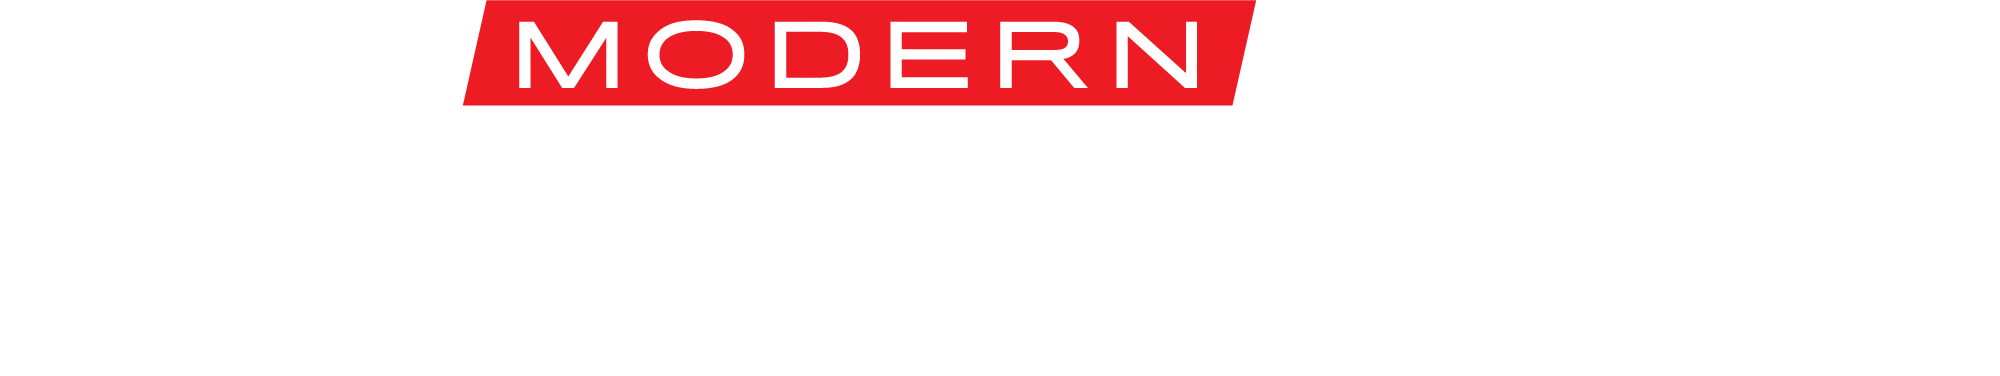 Modern Rodding white and red logo